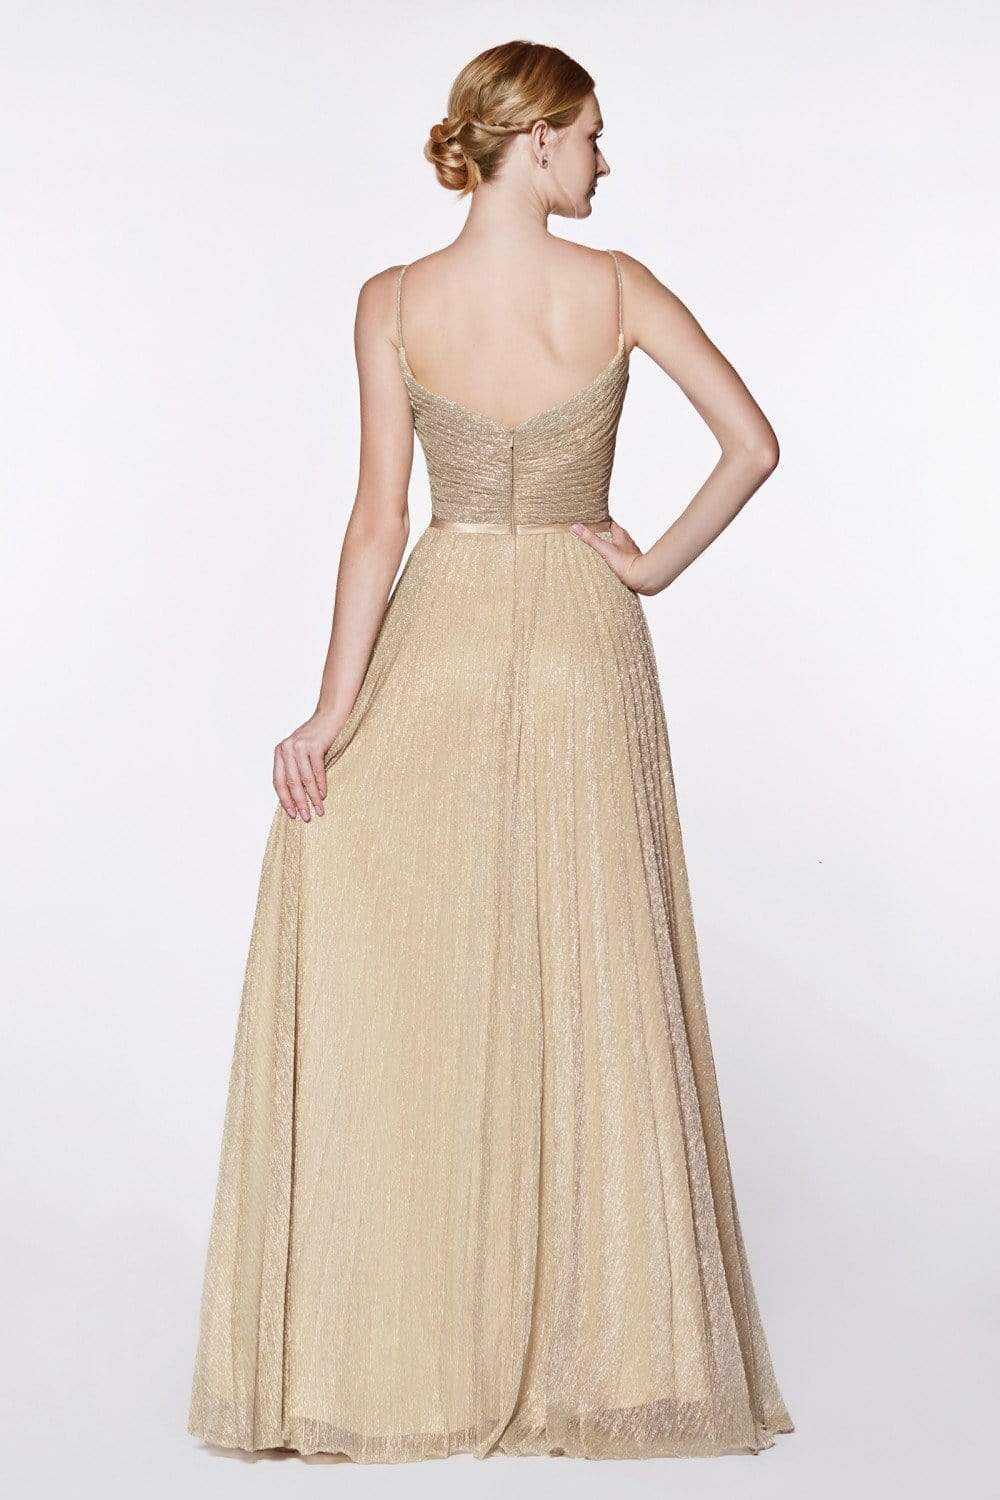 Cinderella Divine, Cinderella Divine - Shirred V Neck Metallic Knit A-Line Gown CJ269 - 1 pc Gold in Size 10 Available